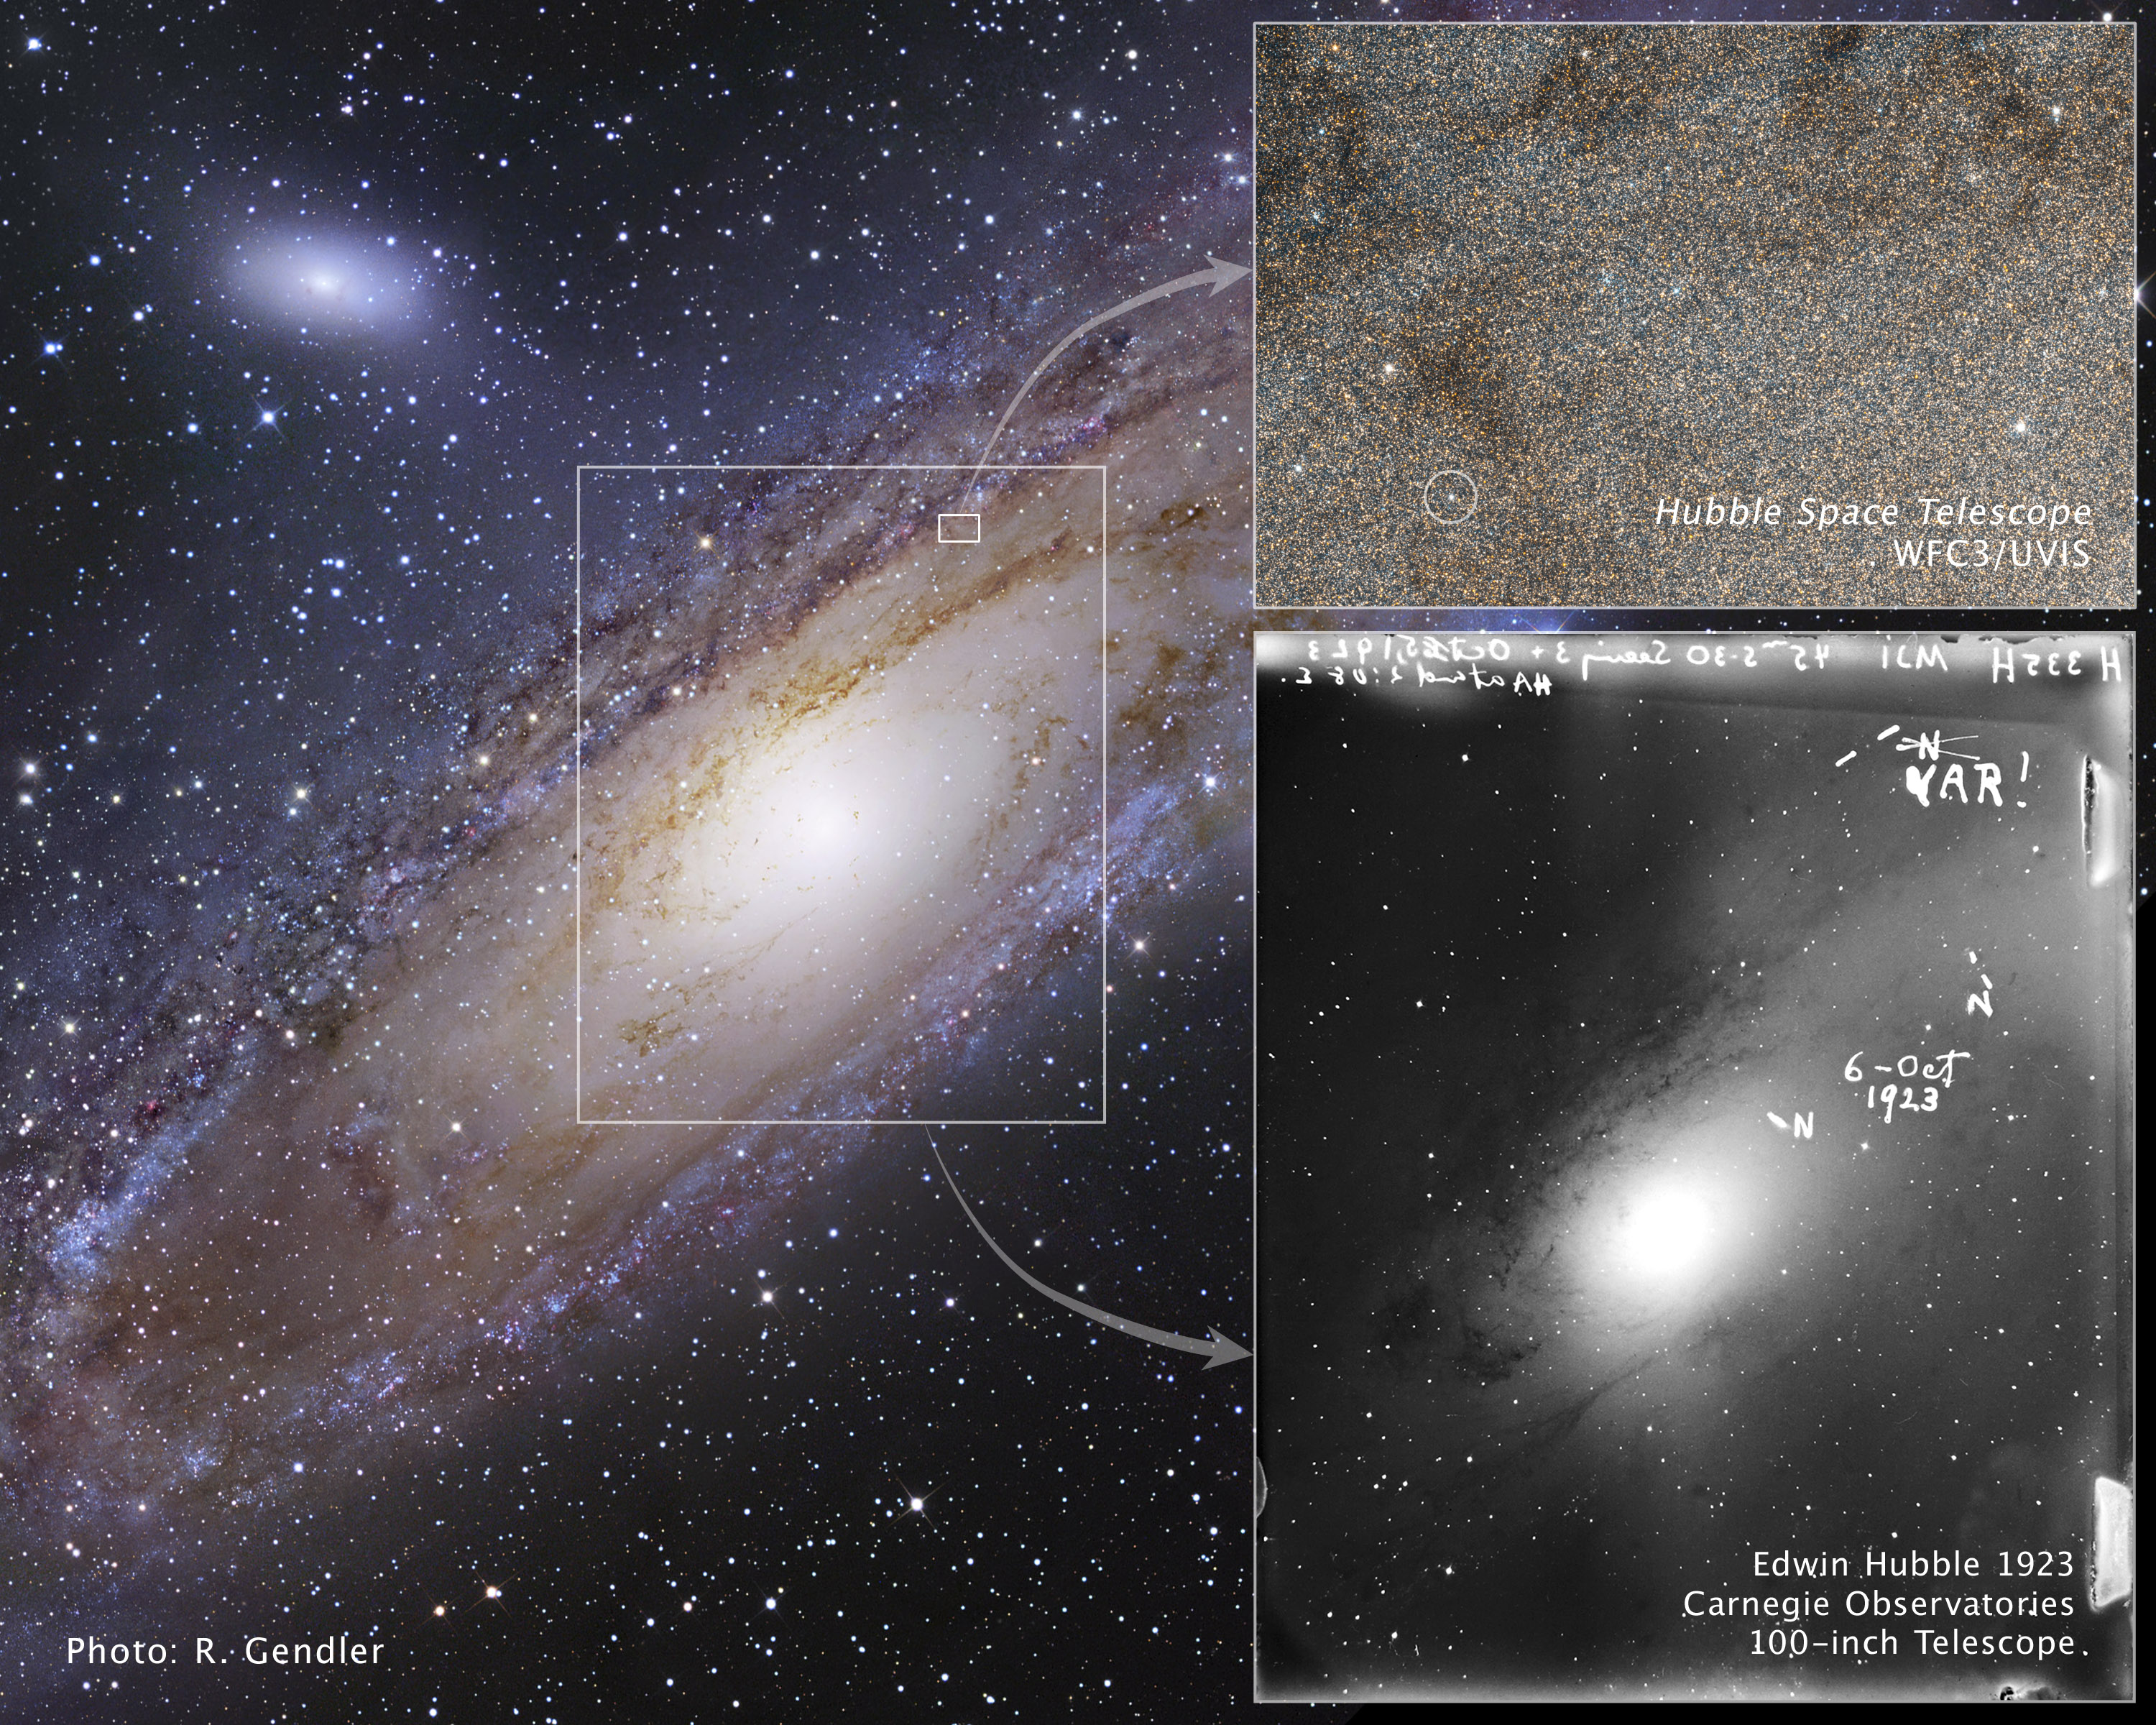 edwin hubble galaxies system